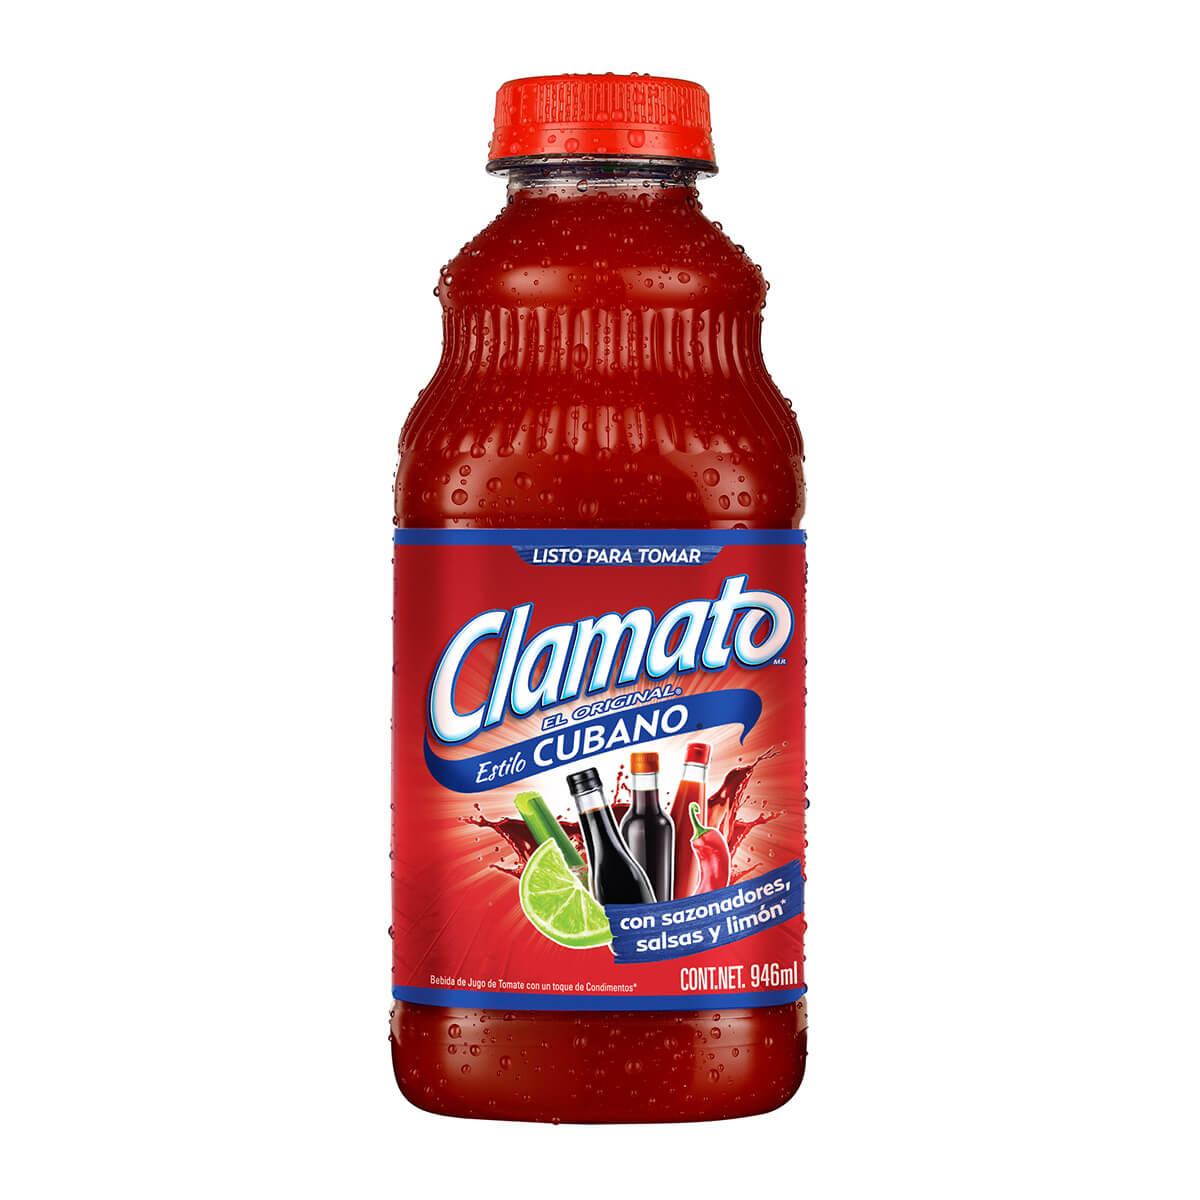 Mott's - Clamato Tomato Cocktail Cubano 946ml.